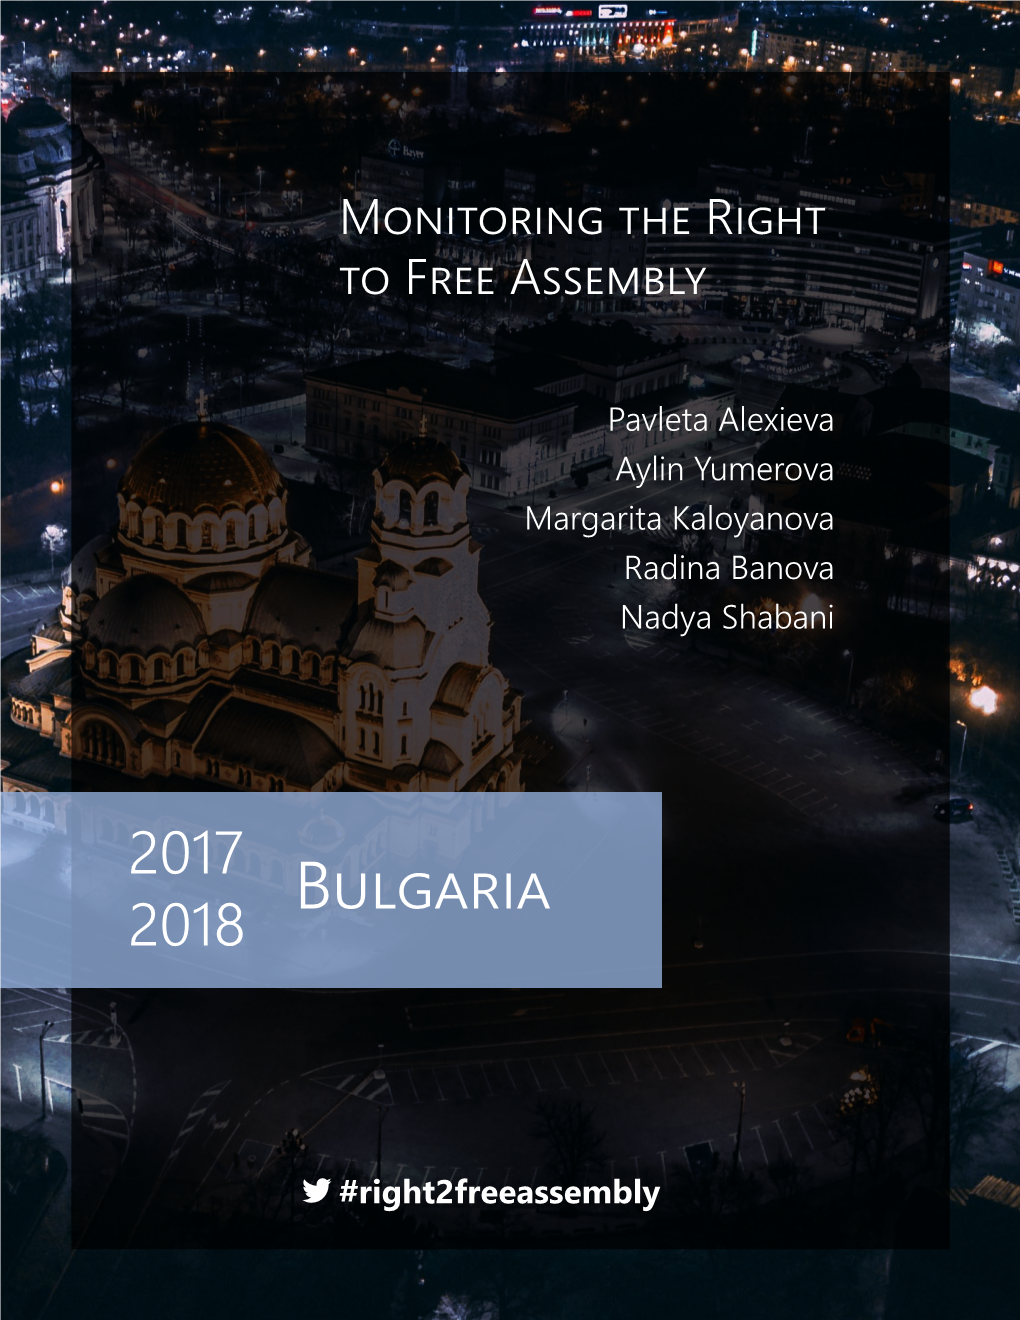 Bulgaria 2018